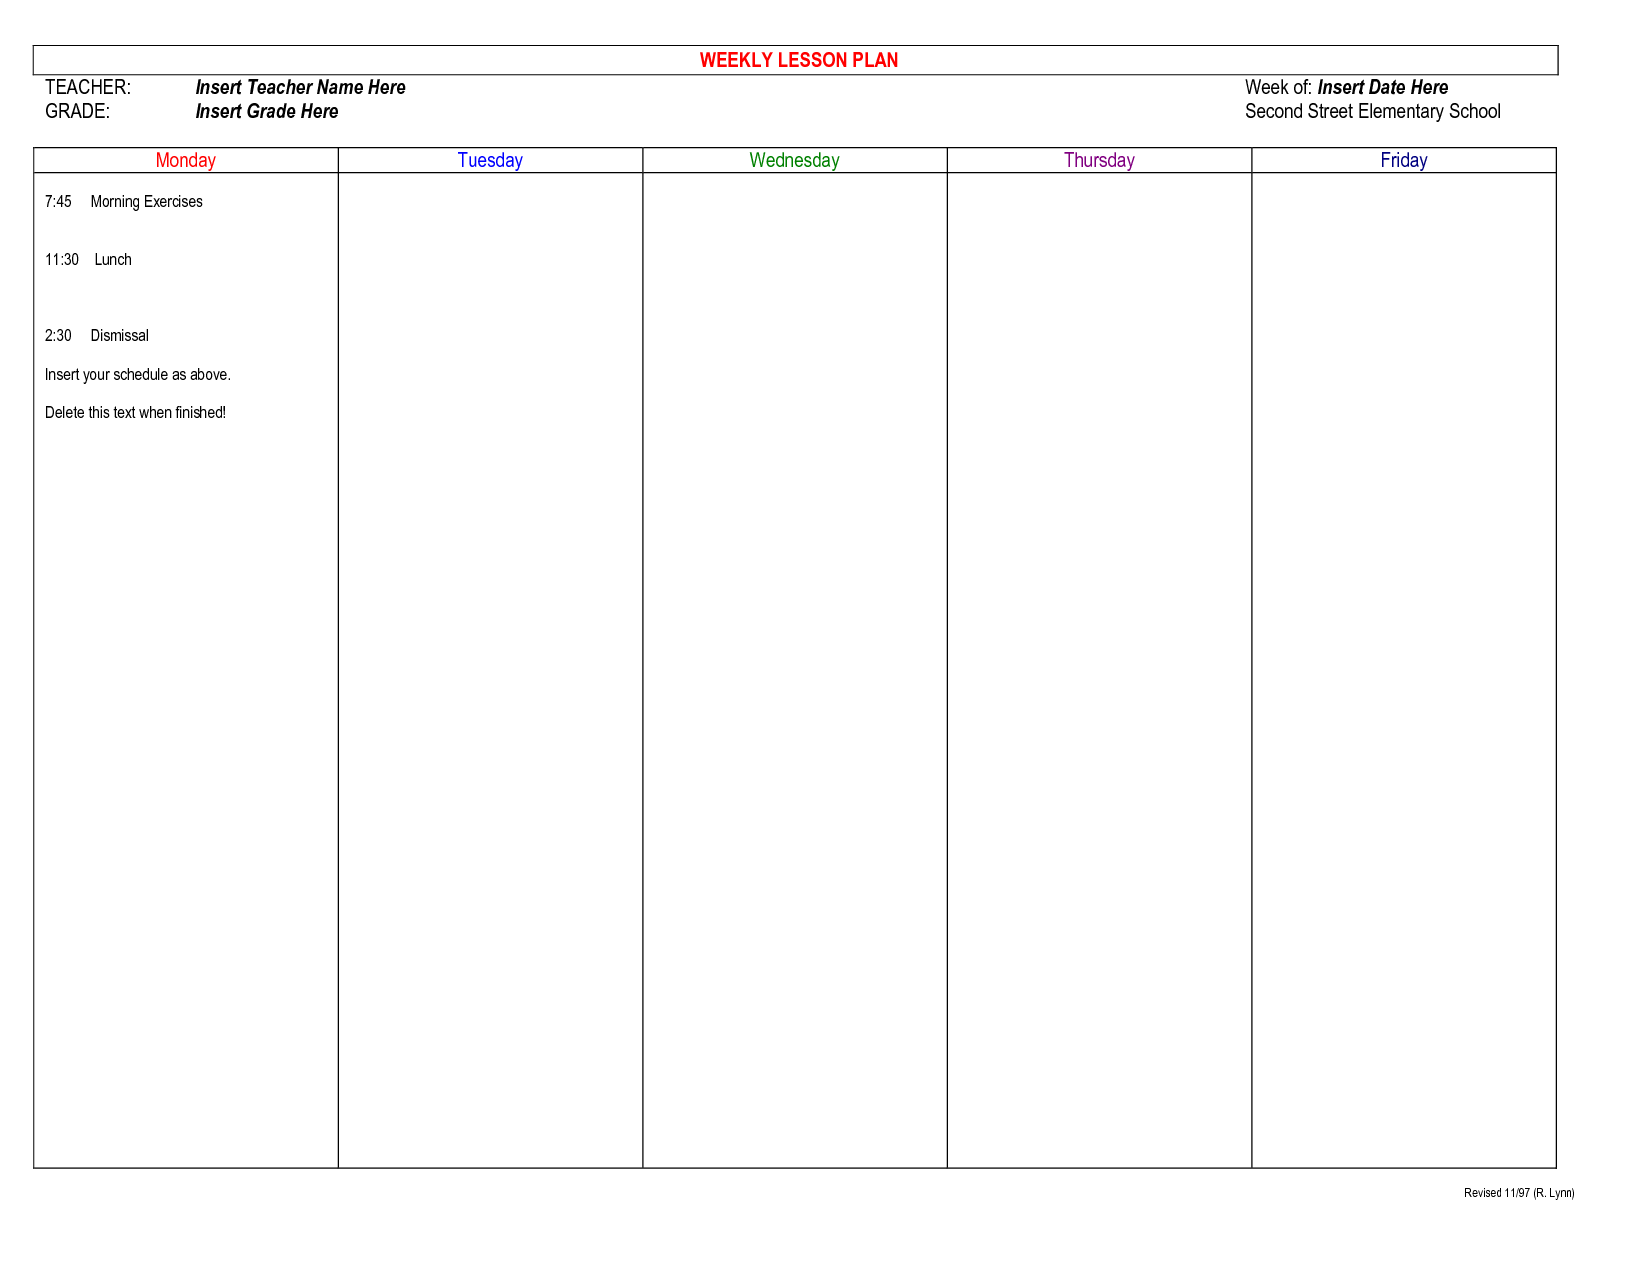 15-best-images-of-free-printable-teacher-planner-worksheets-printable-weekly-lesson-plan